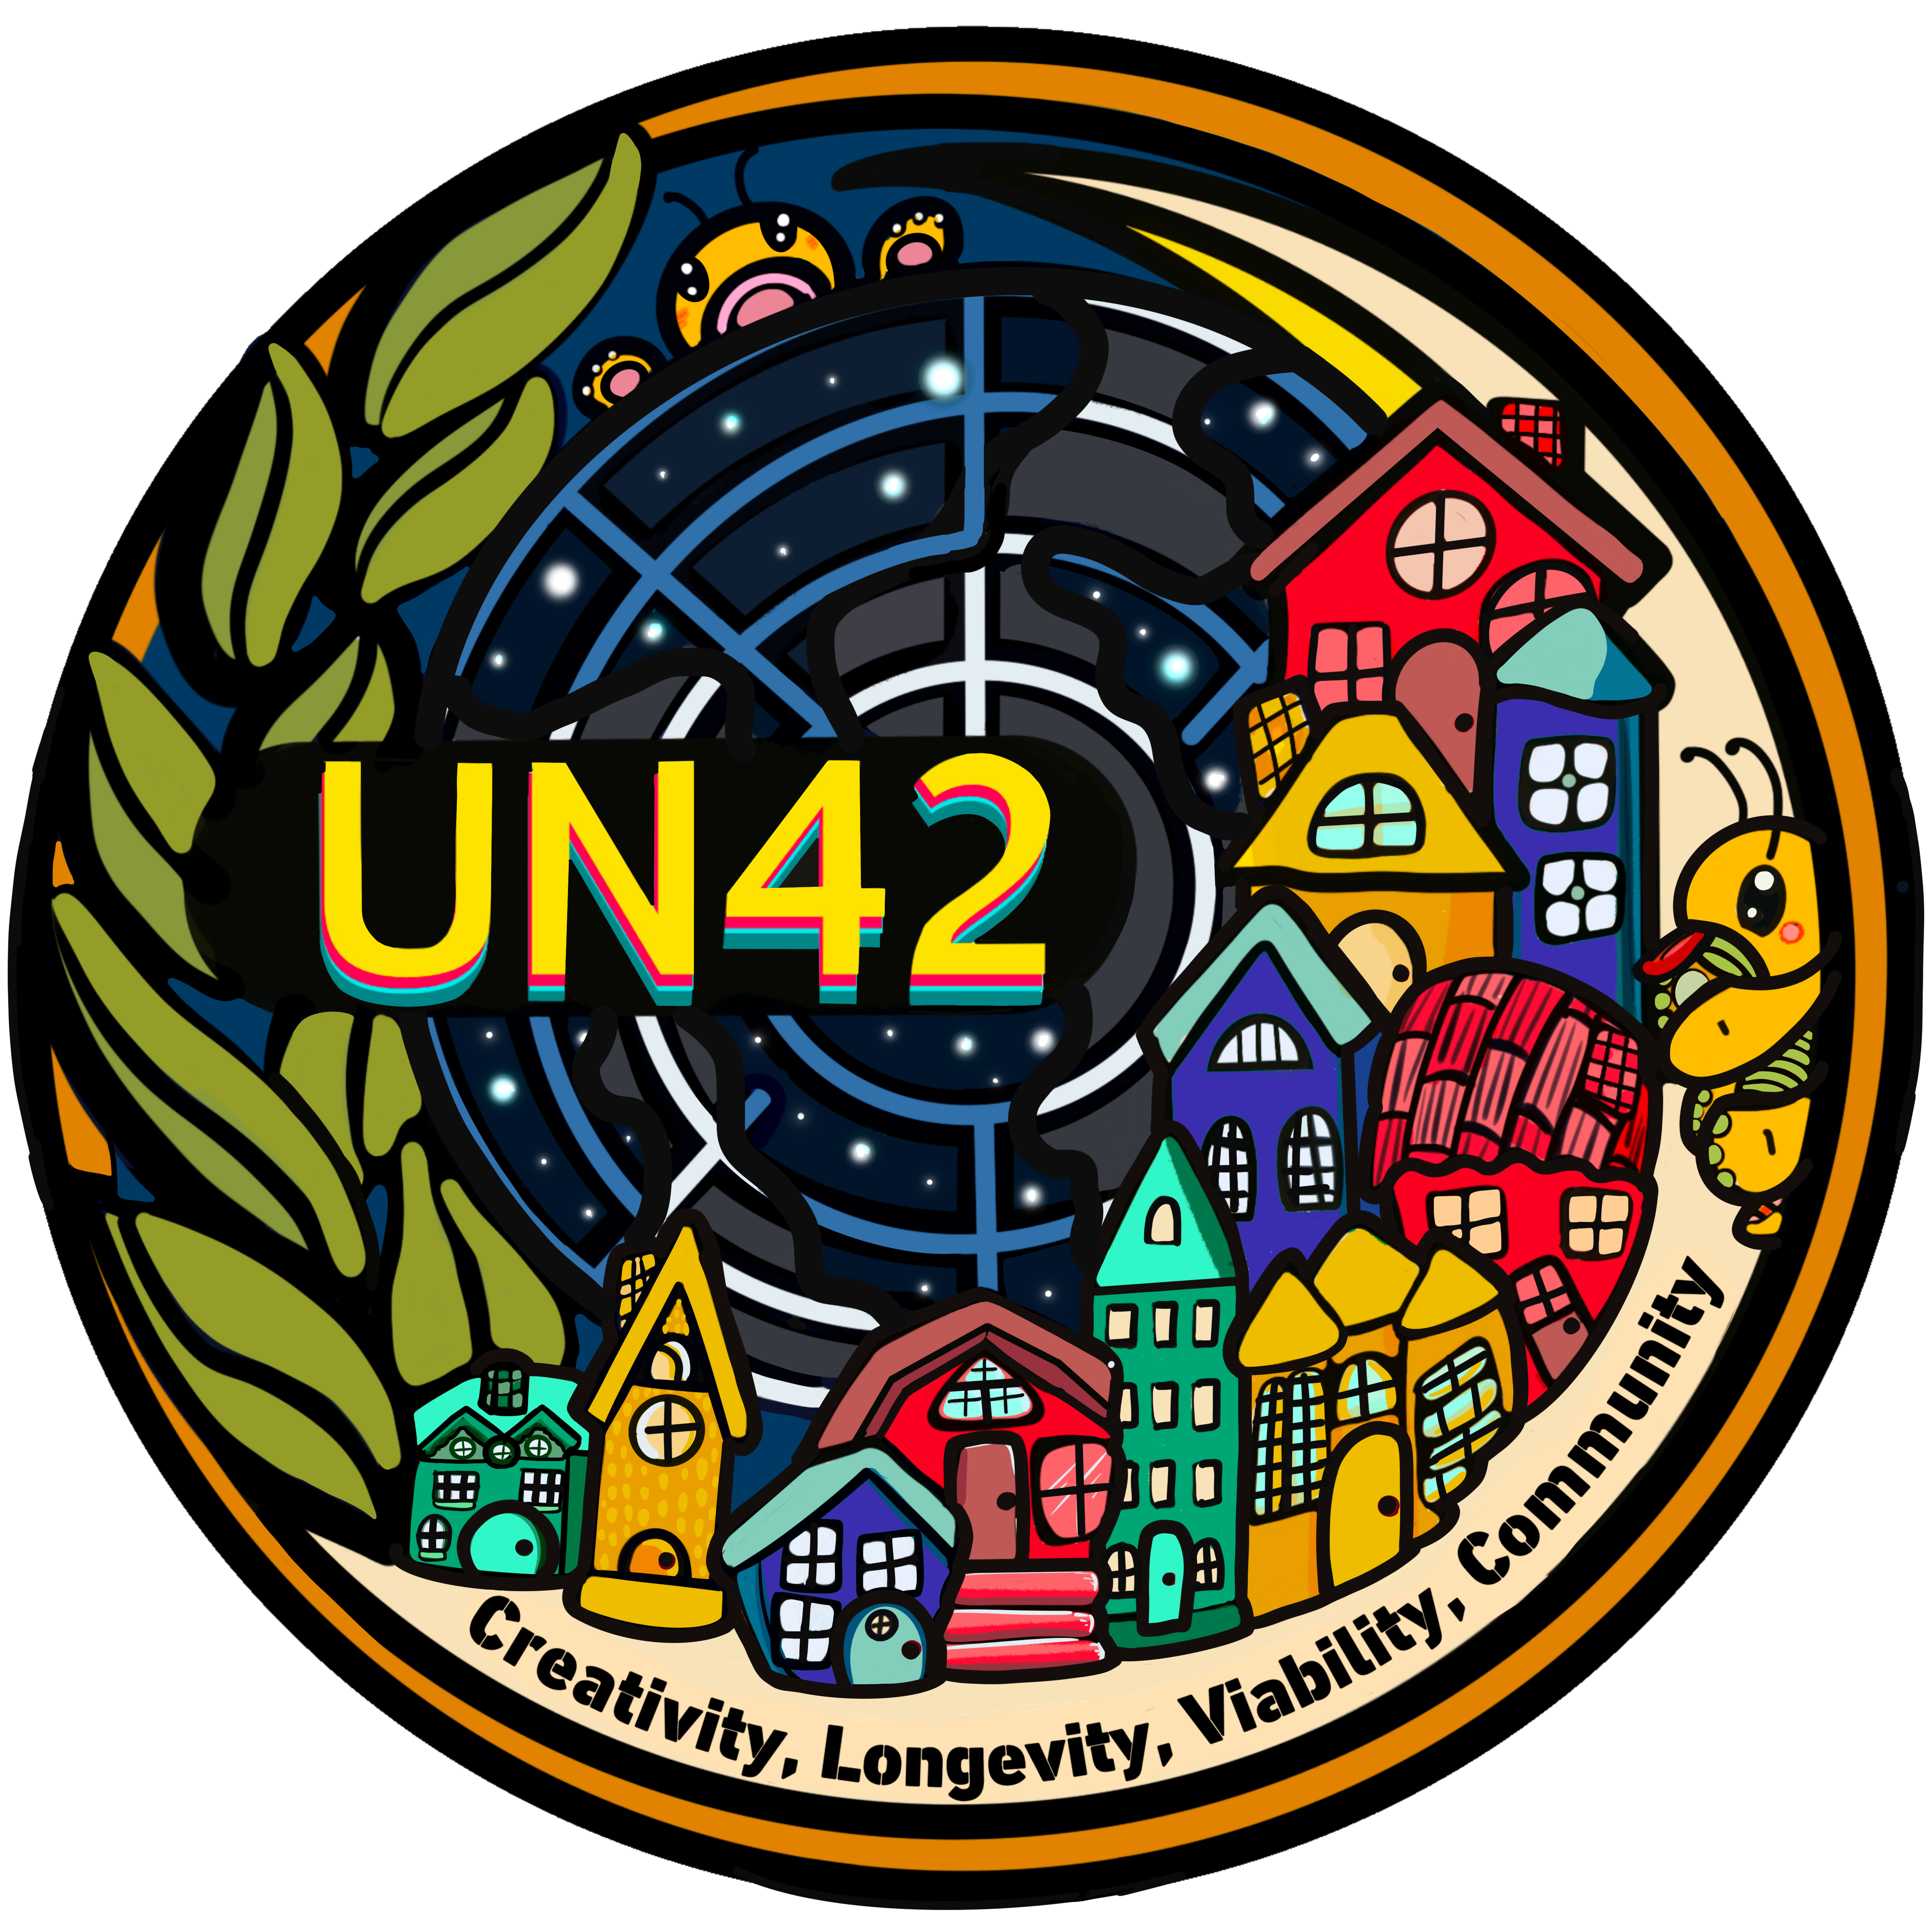 Unites Nations 42 Logo